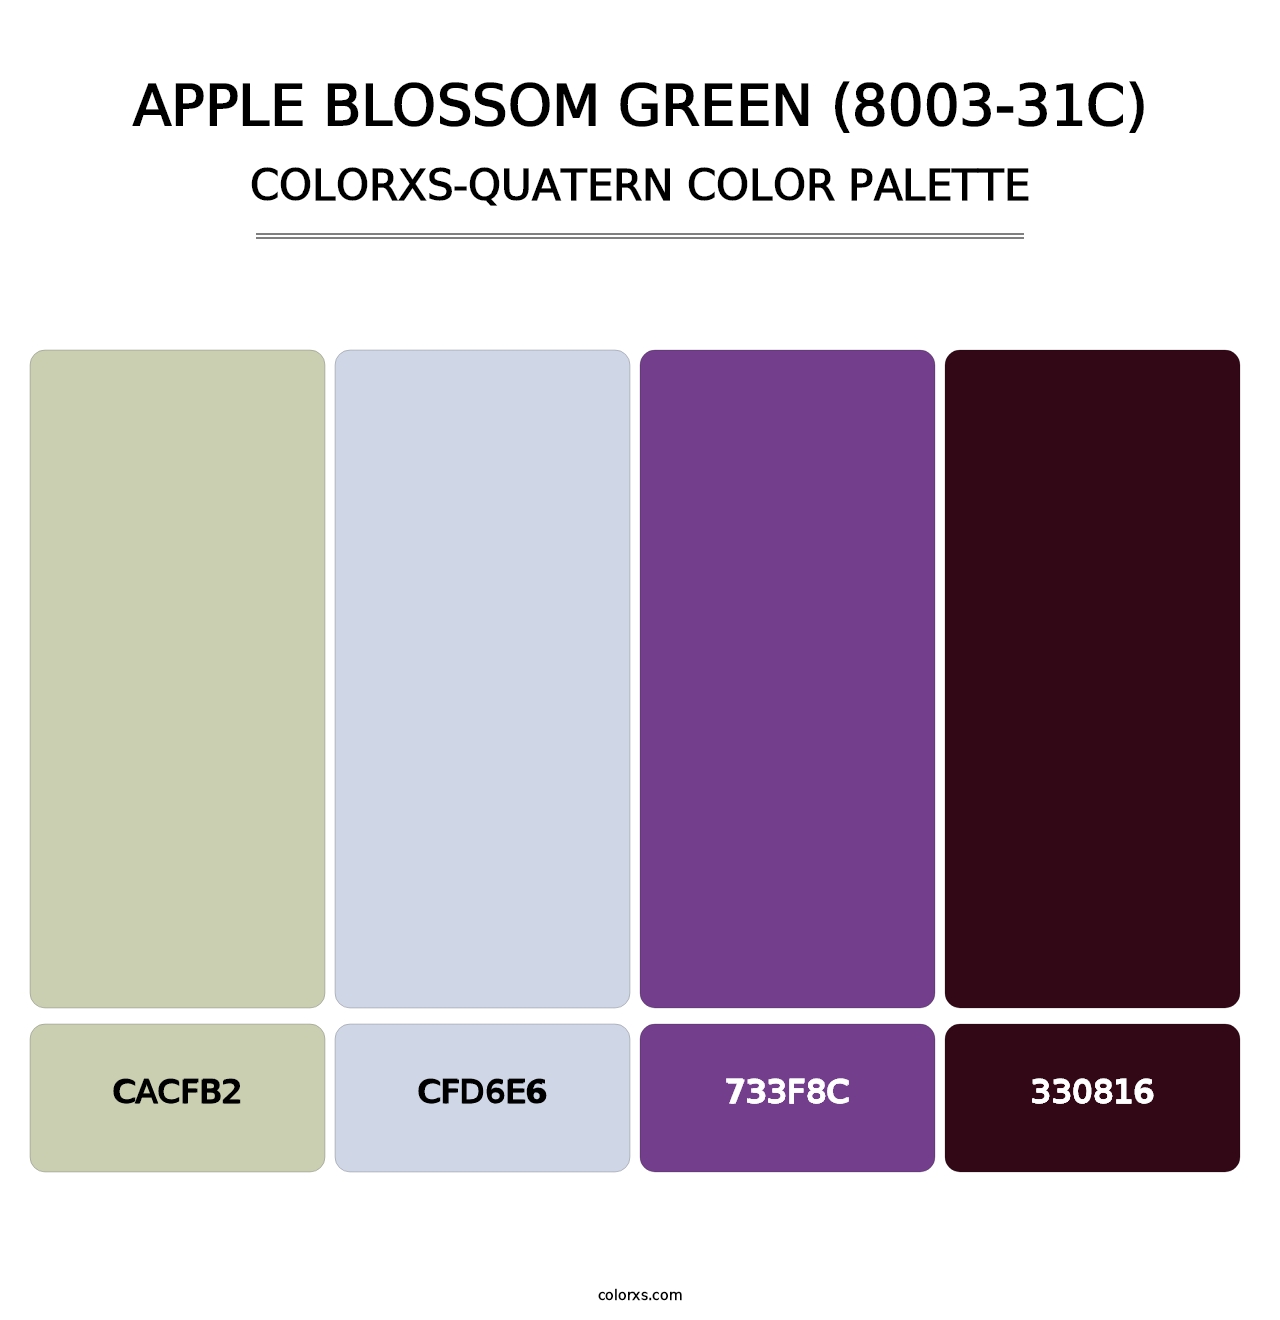 Apple Blossom Green (8003-31C) - Colorxs Quatern Palette